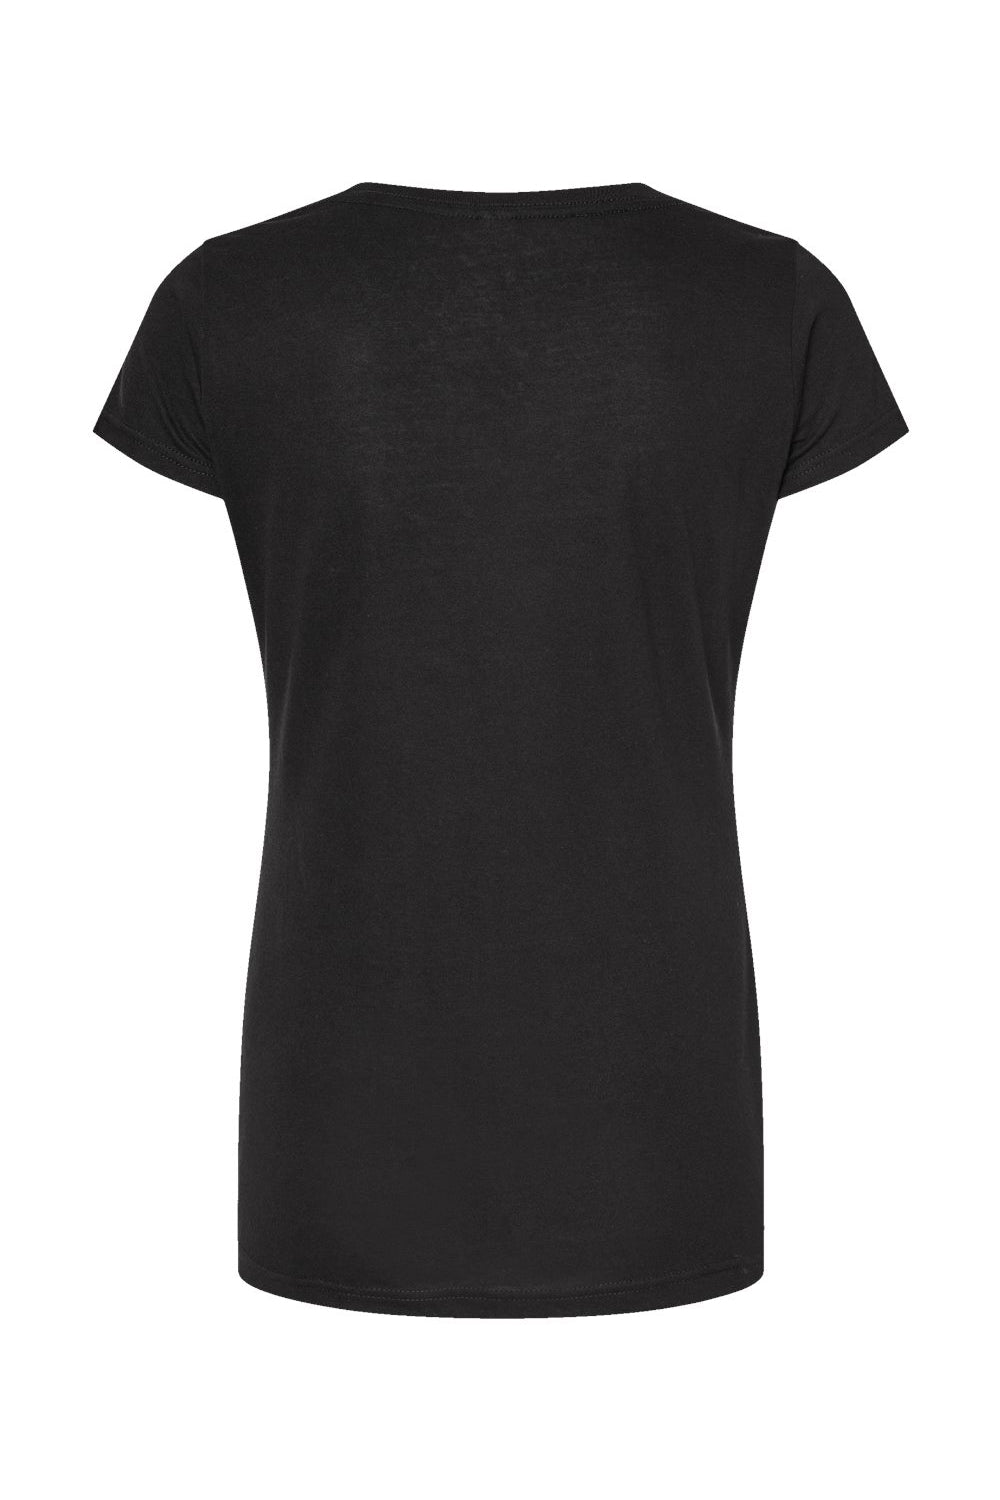 Tultex 243 Womens Poly-Rich Short Sleeve Scoop Neck T-Shirt Black Flat Back